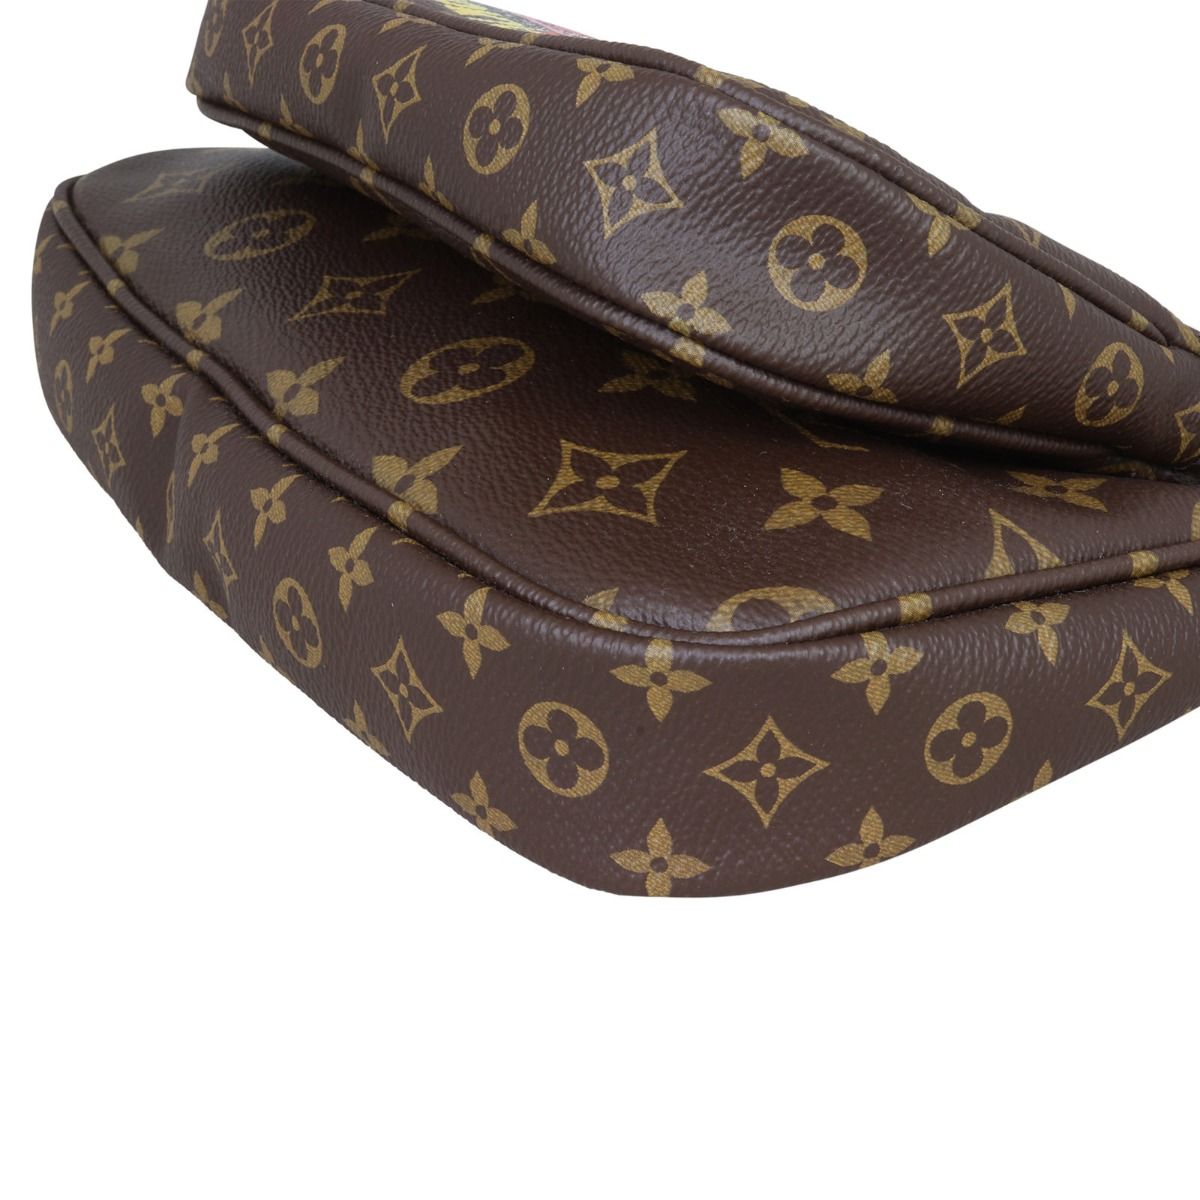 Louis Vuitton Pochette accessories with monogram strap – JOY'S